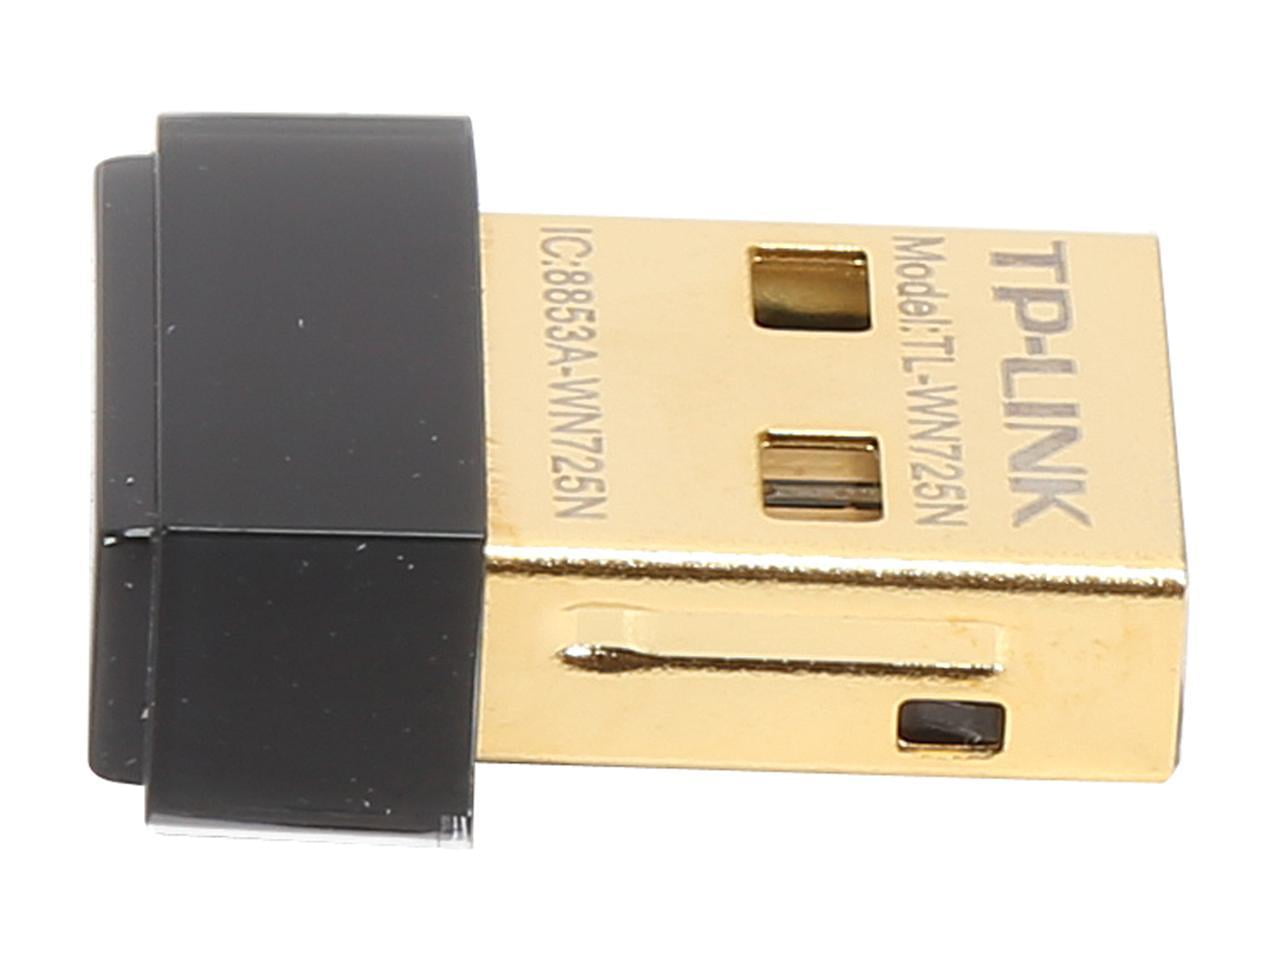 TP-LINK (32 WEP, TL-WN725N 10 150Mbps, / WPA & & bit) in Plug Adapter, Wireless WPA2, IEEE Play bit 802.11b/g/n, 64 Windows Nano N150